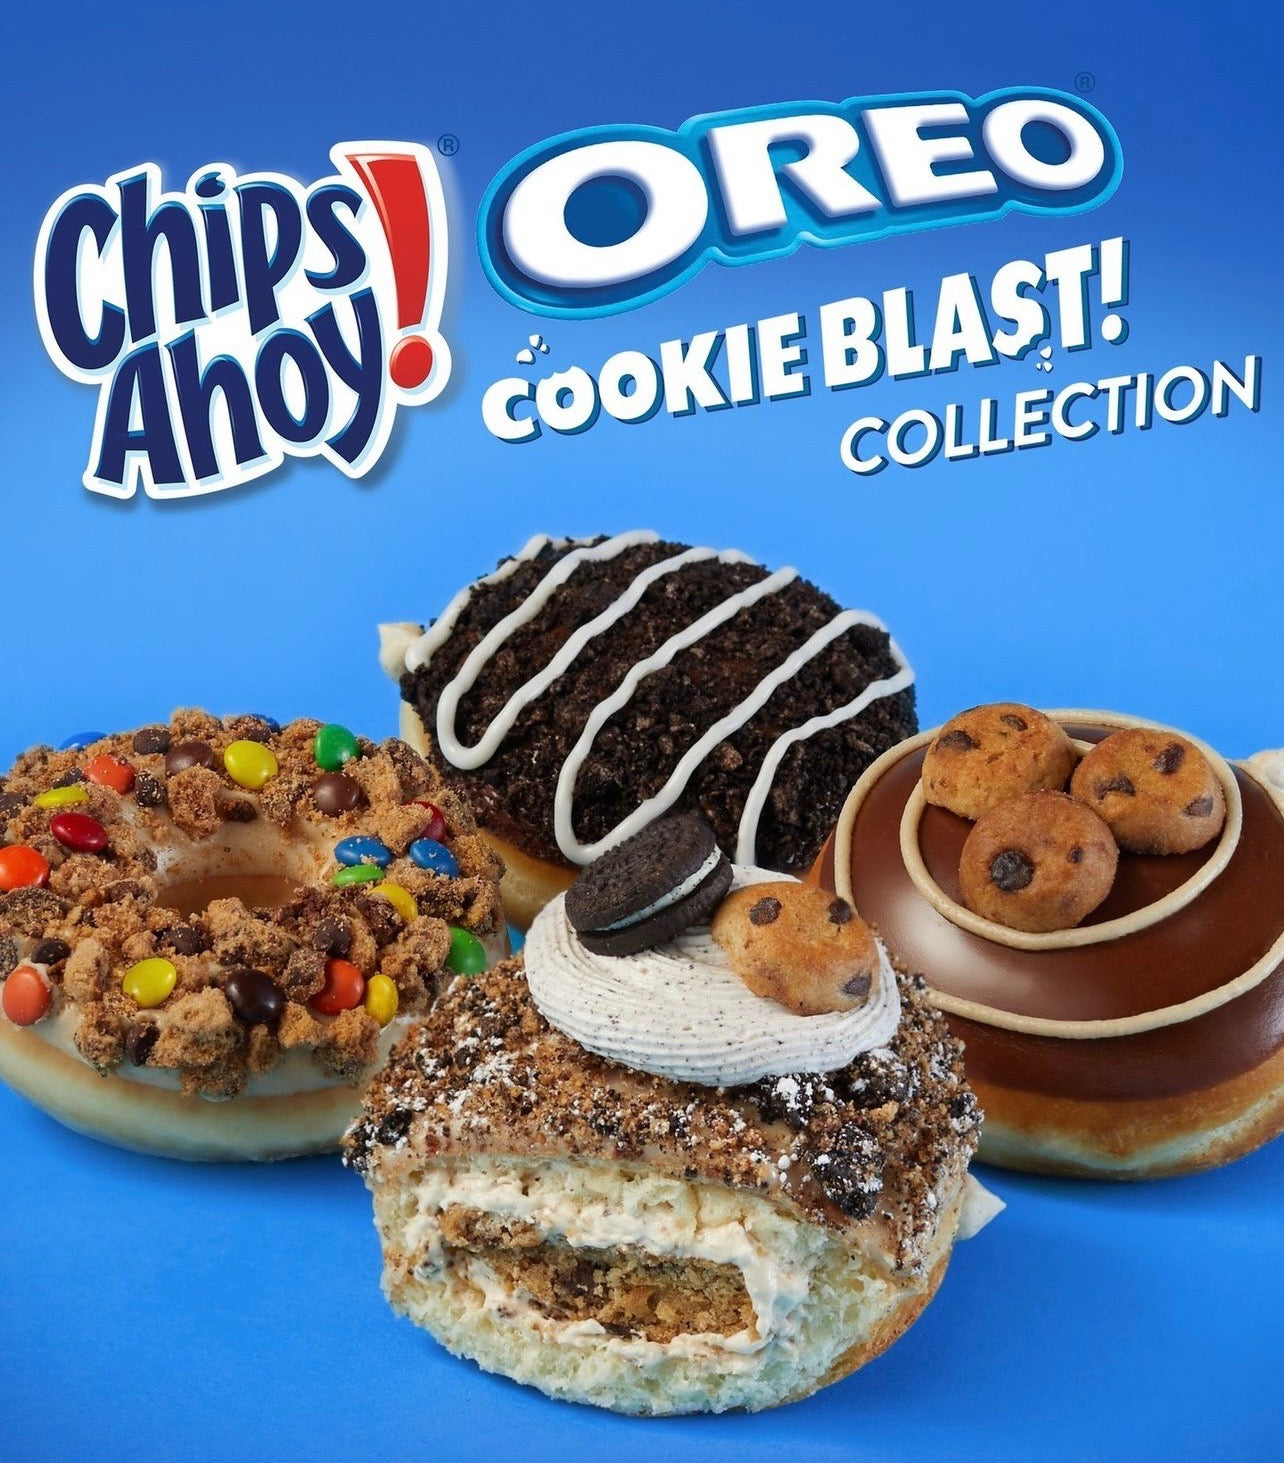 Krispy Kreme Chips Ahoy! Oreo Cookie Blast Collection